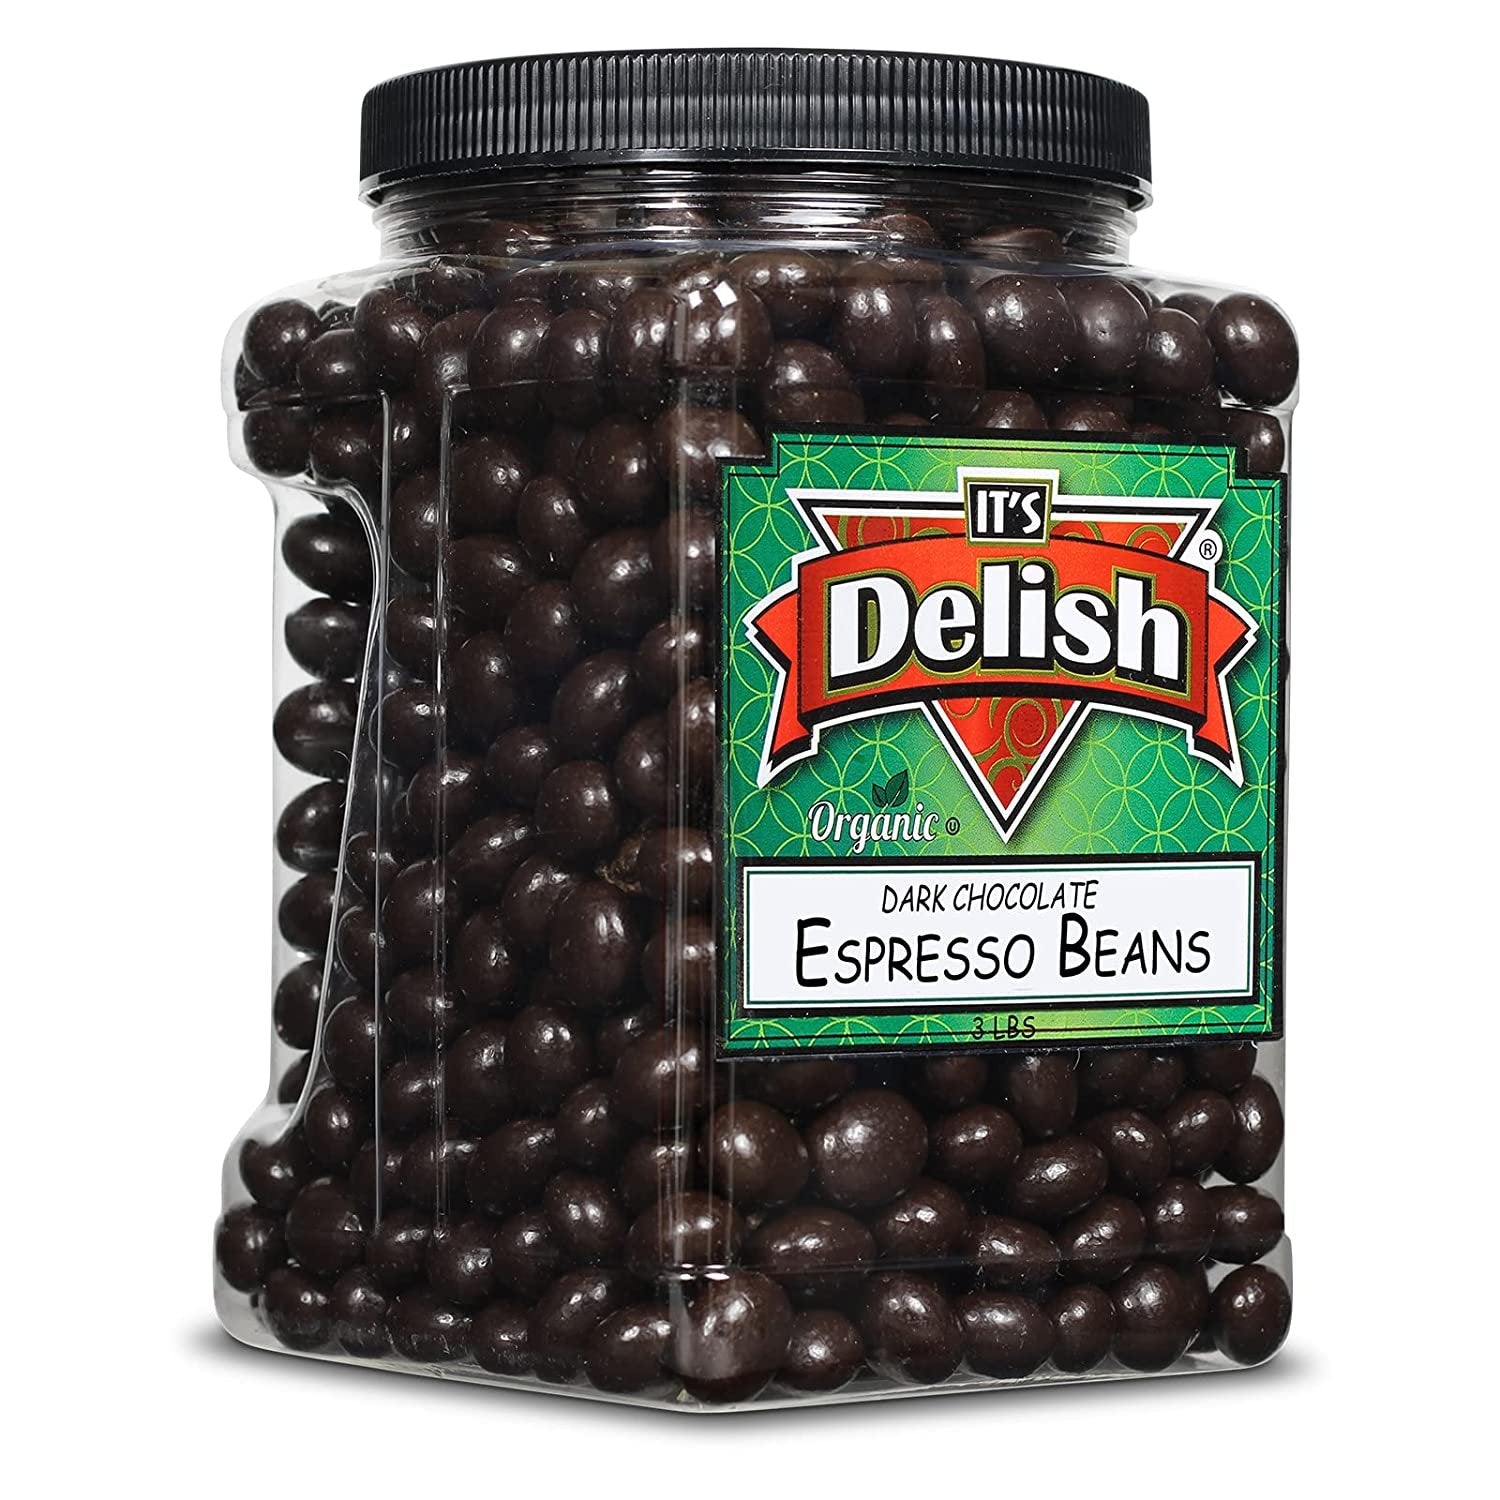 Organic Dark Chocolate Espresso Beans 3 LBS Jumbo Container Jar